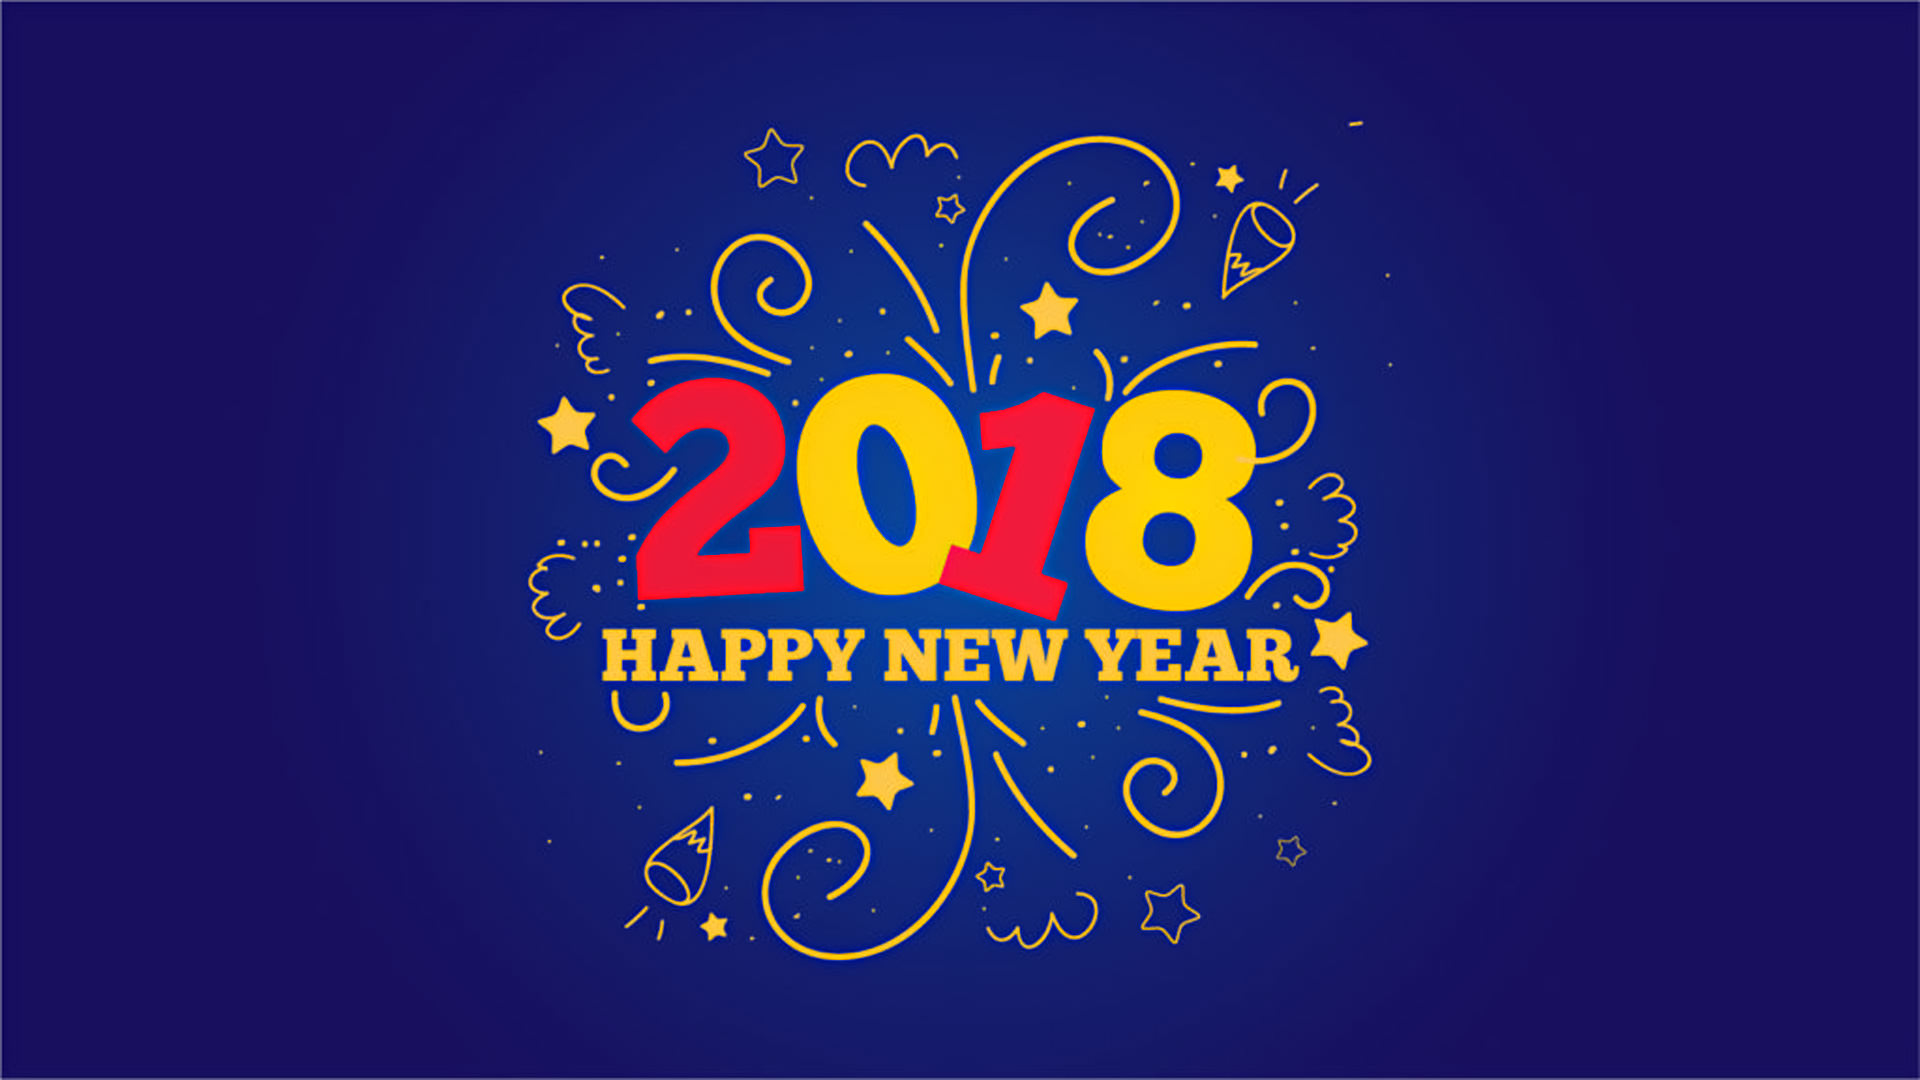 Simple New Year 2018 Wallpaper for Desktop